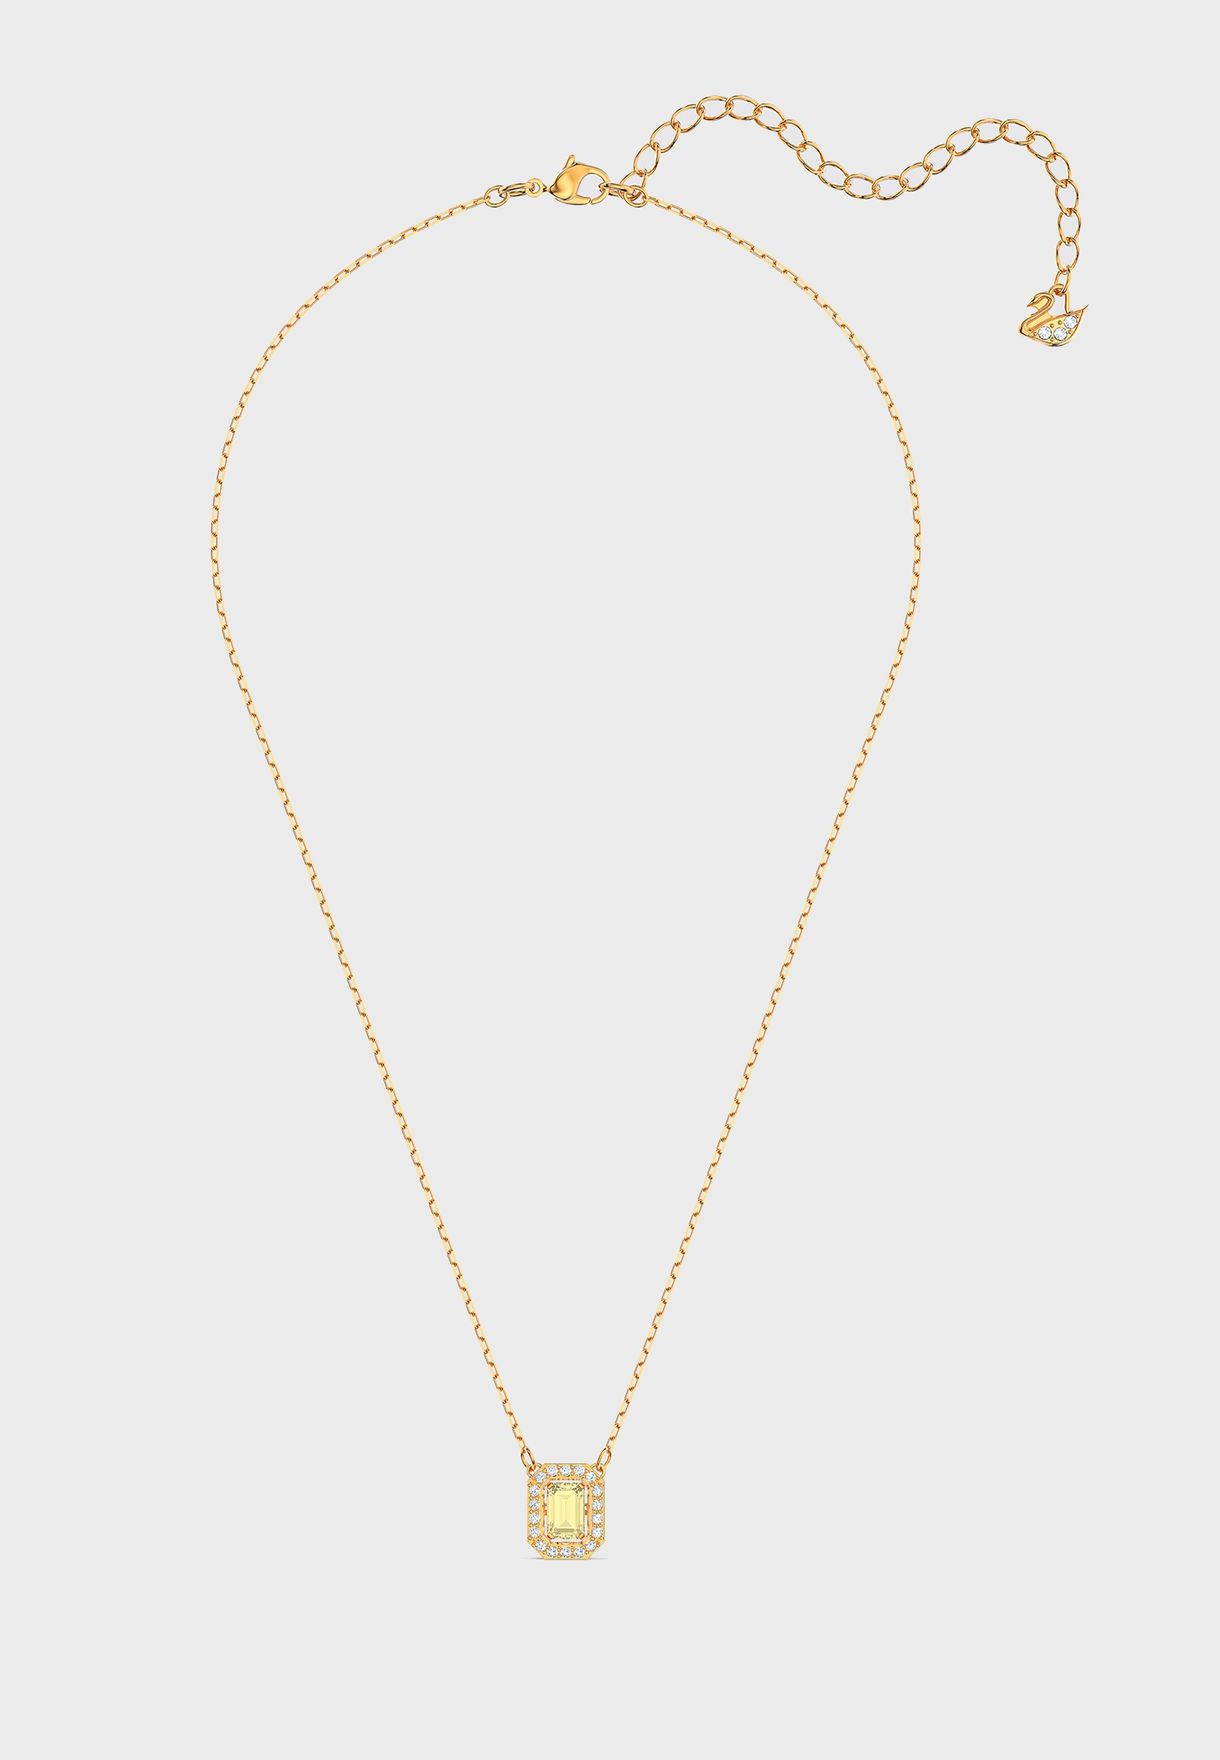 Millenia square necklace